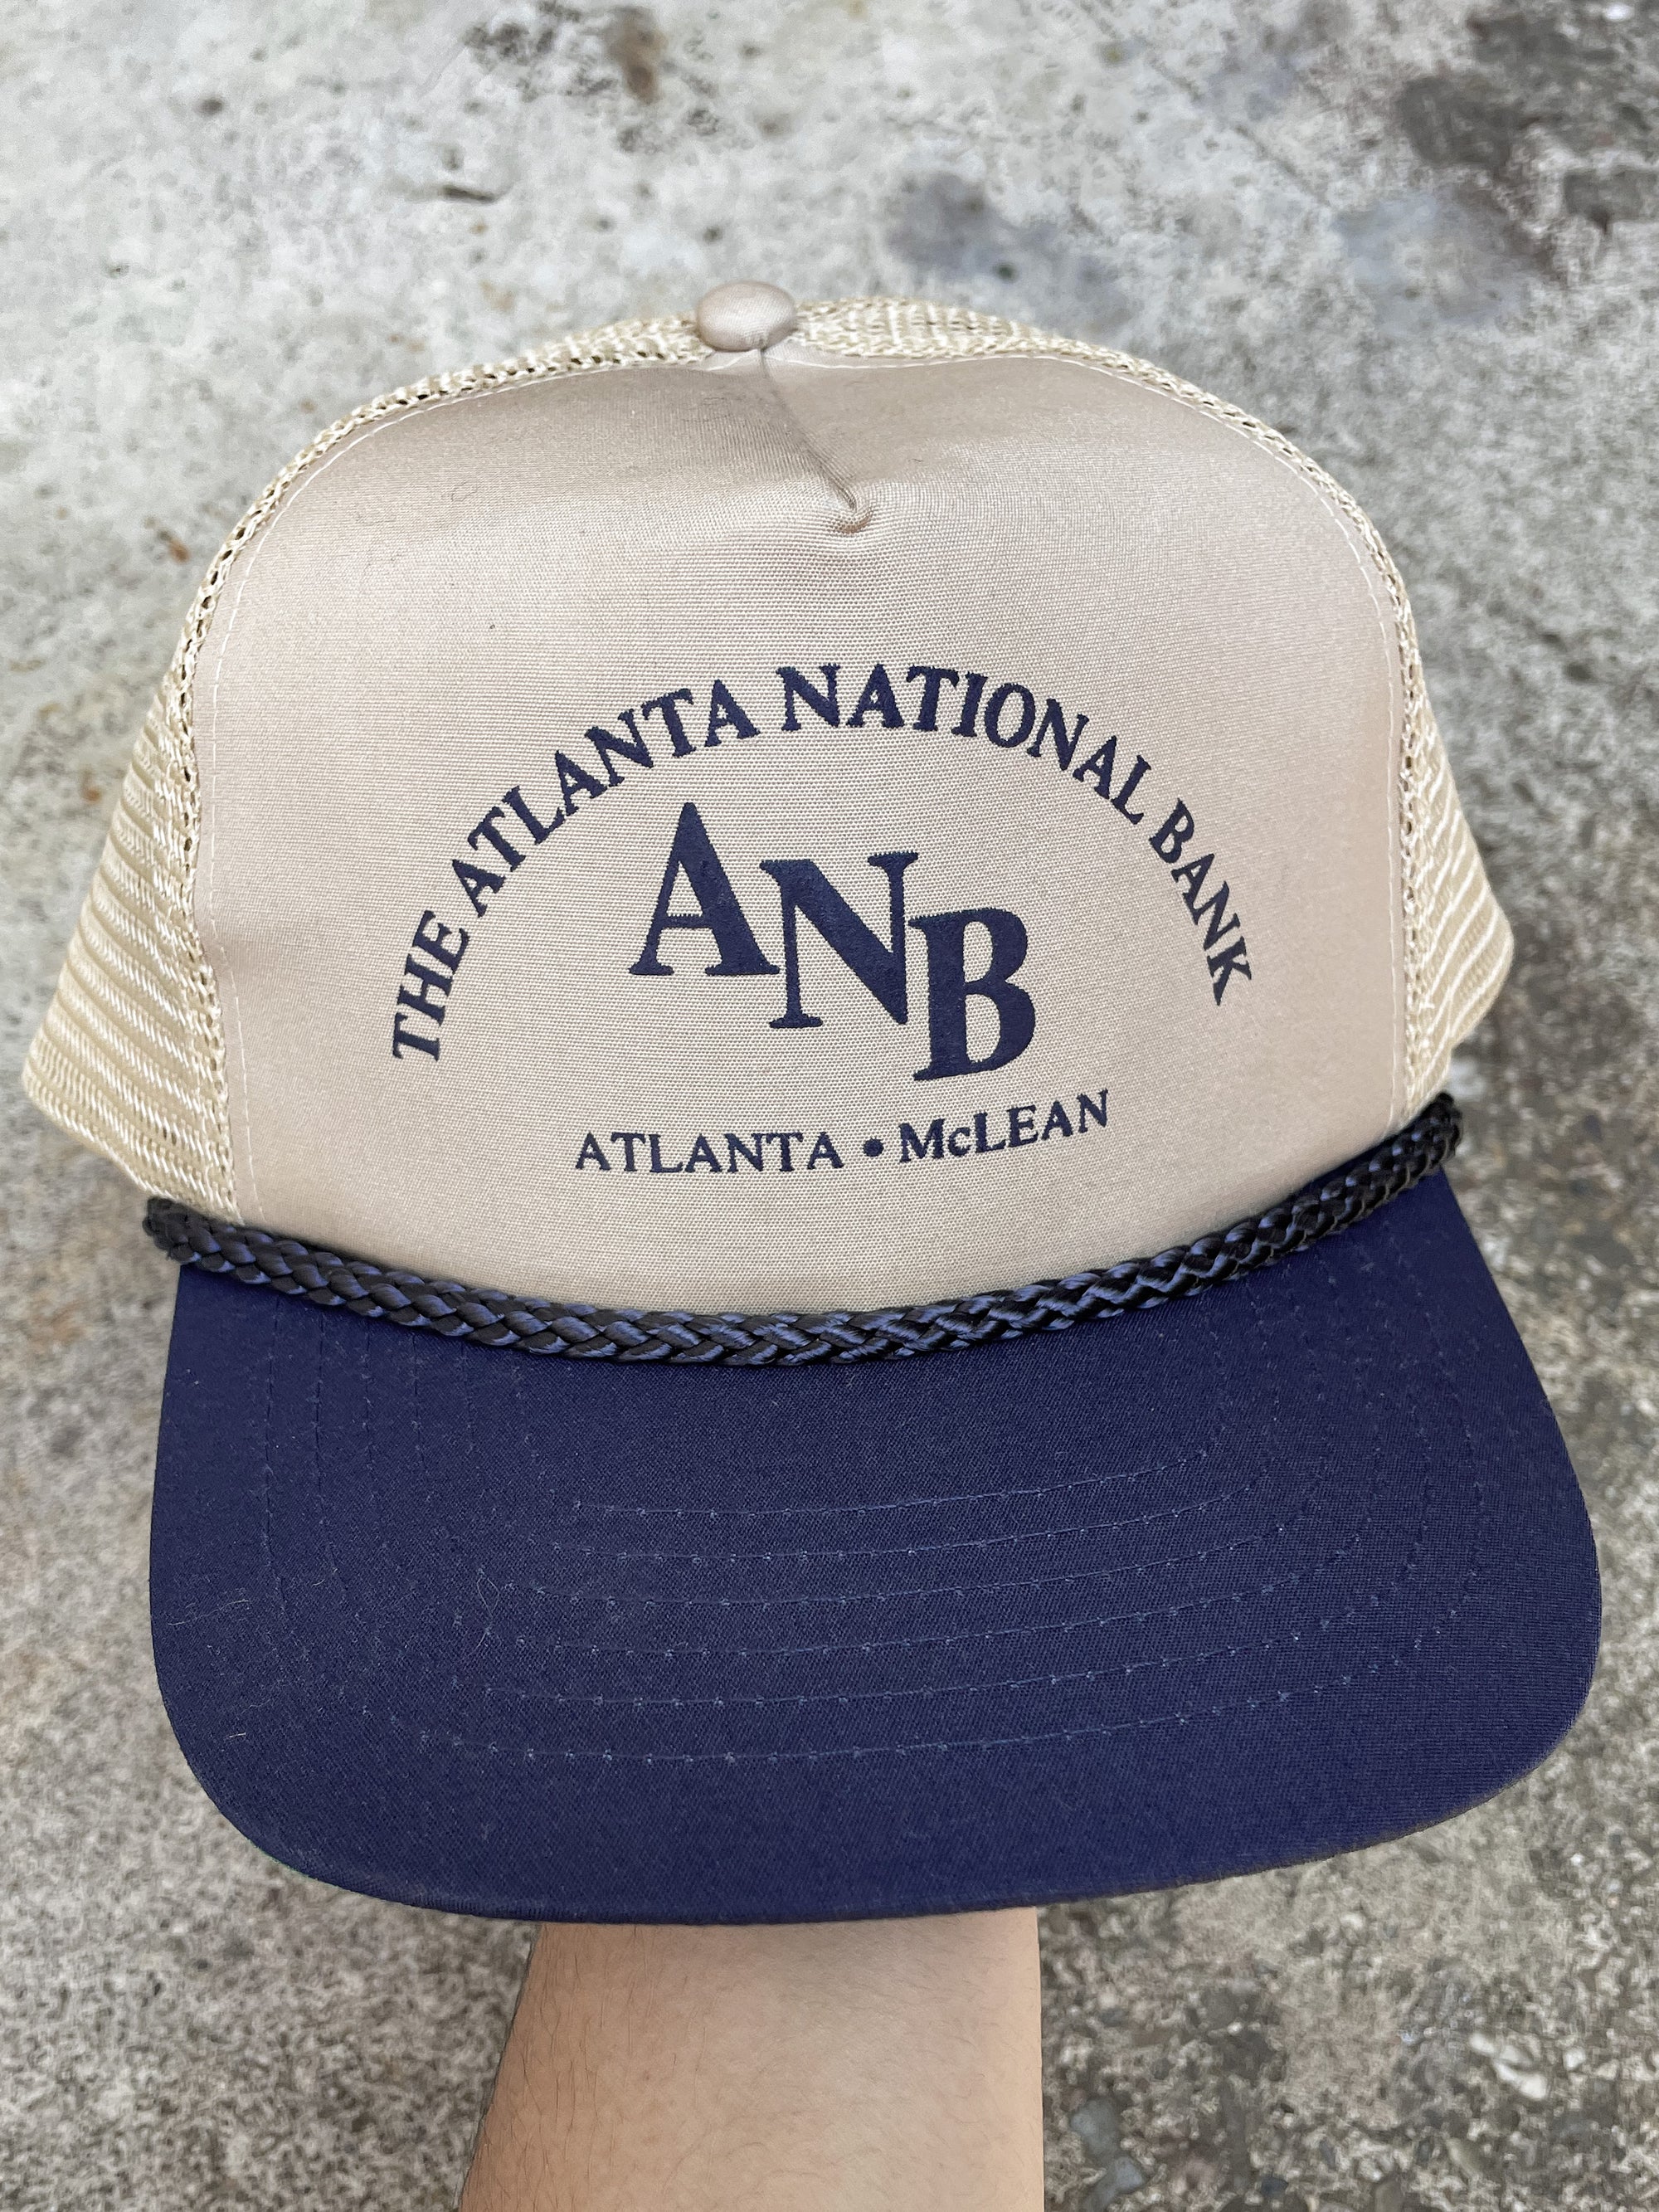 1990s “Atlanta National Bank” Trucker Hat